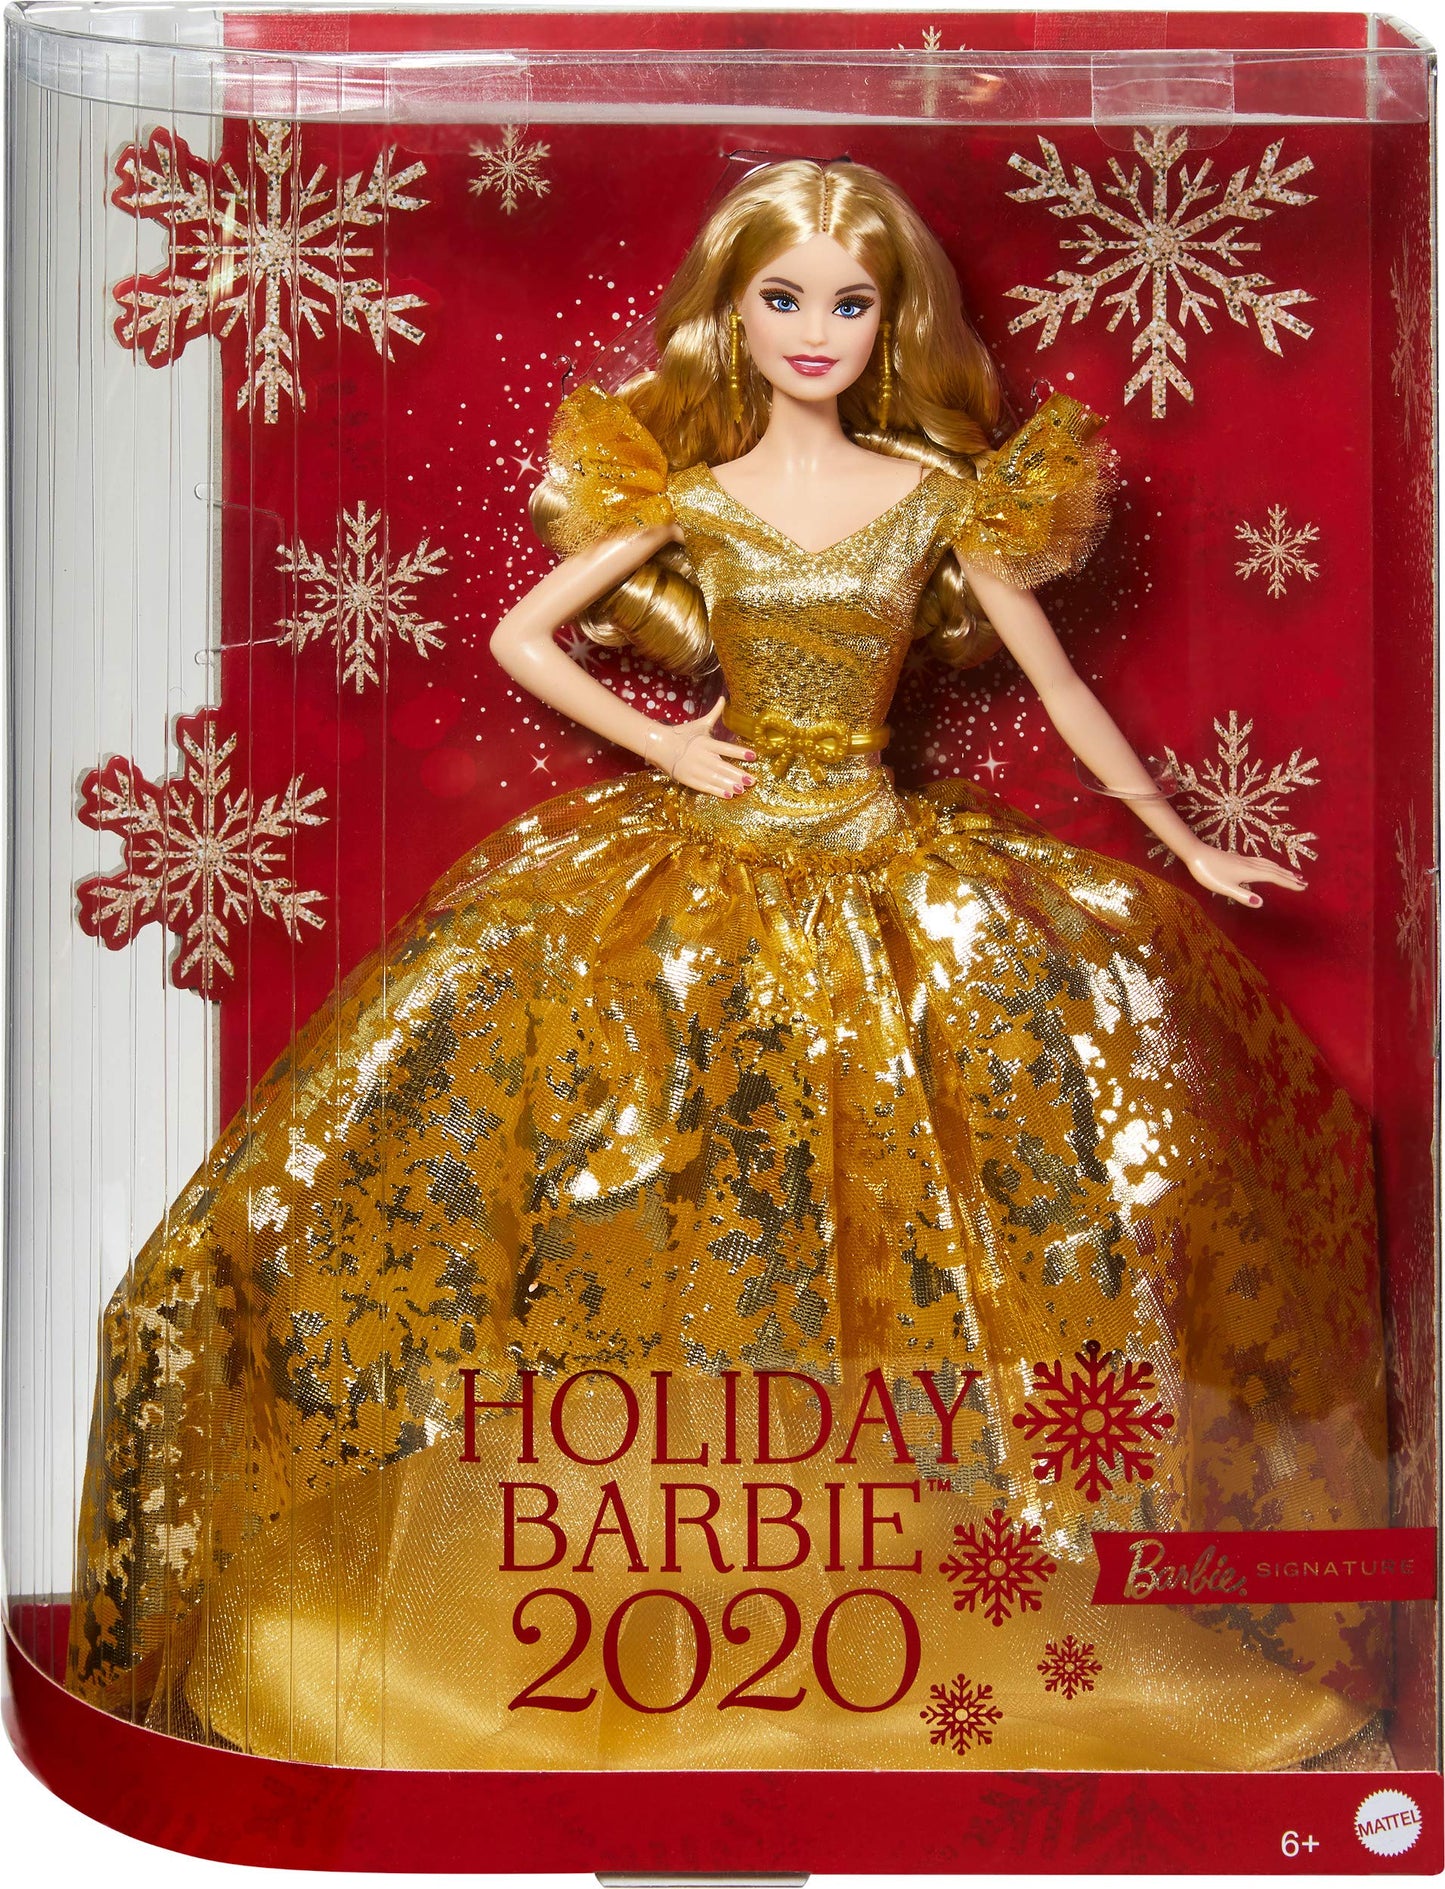 Barbie Signature 2020 Holiday Barbie Doll